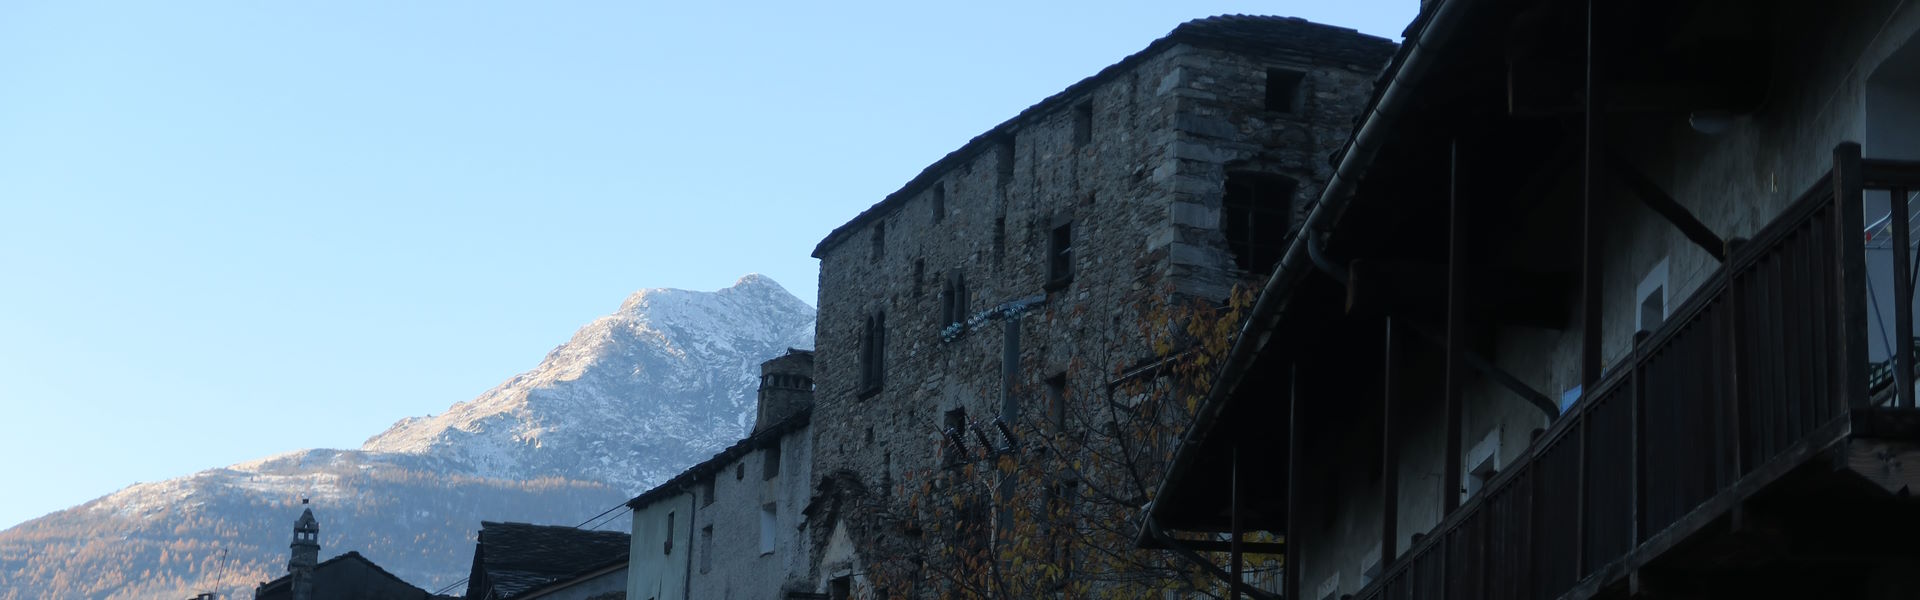 Castello Vallaise